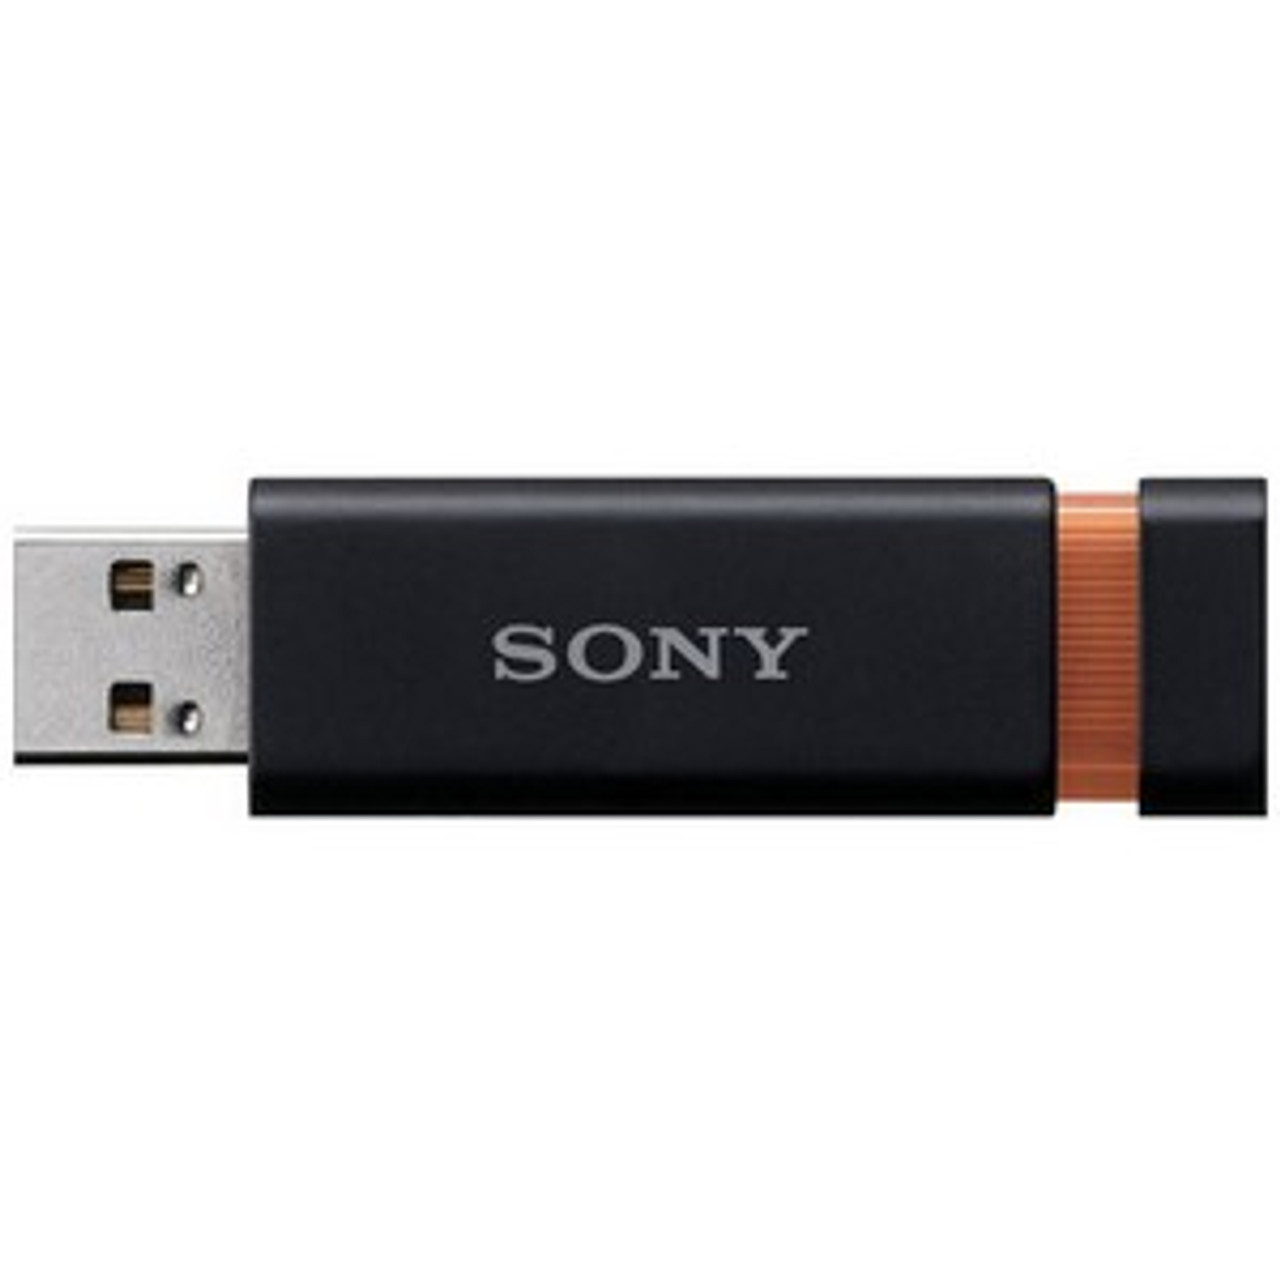 USM8GL/E - Sony Micro Vault Click USM8GL 8 GB USB 2.0 Flash Drive - External